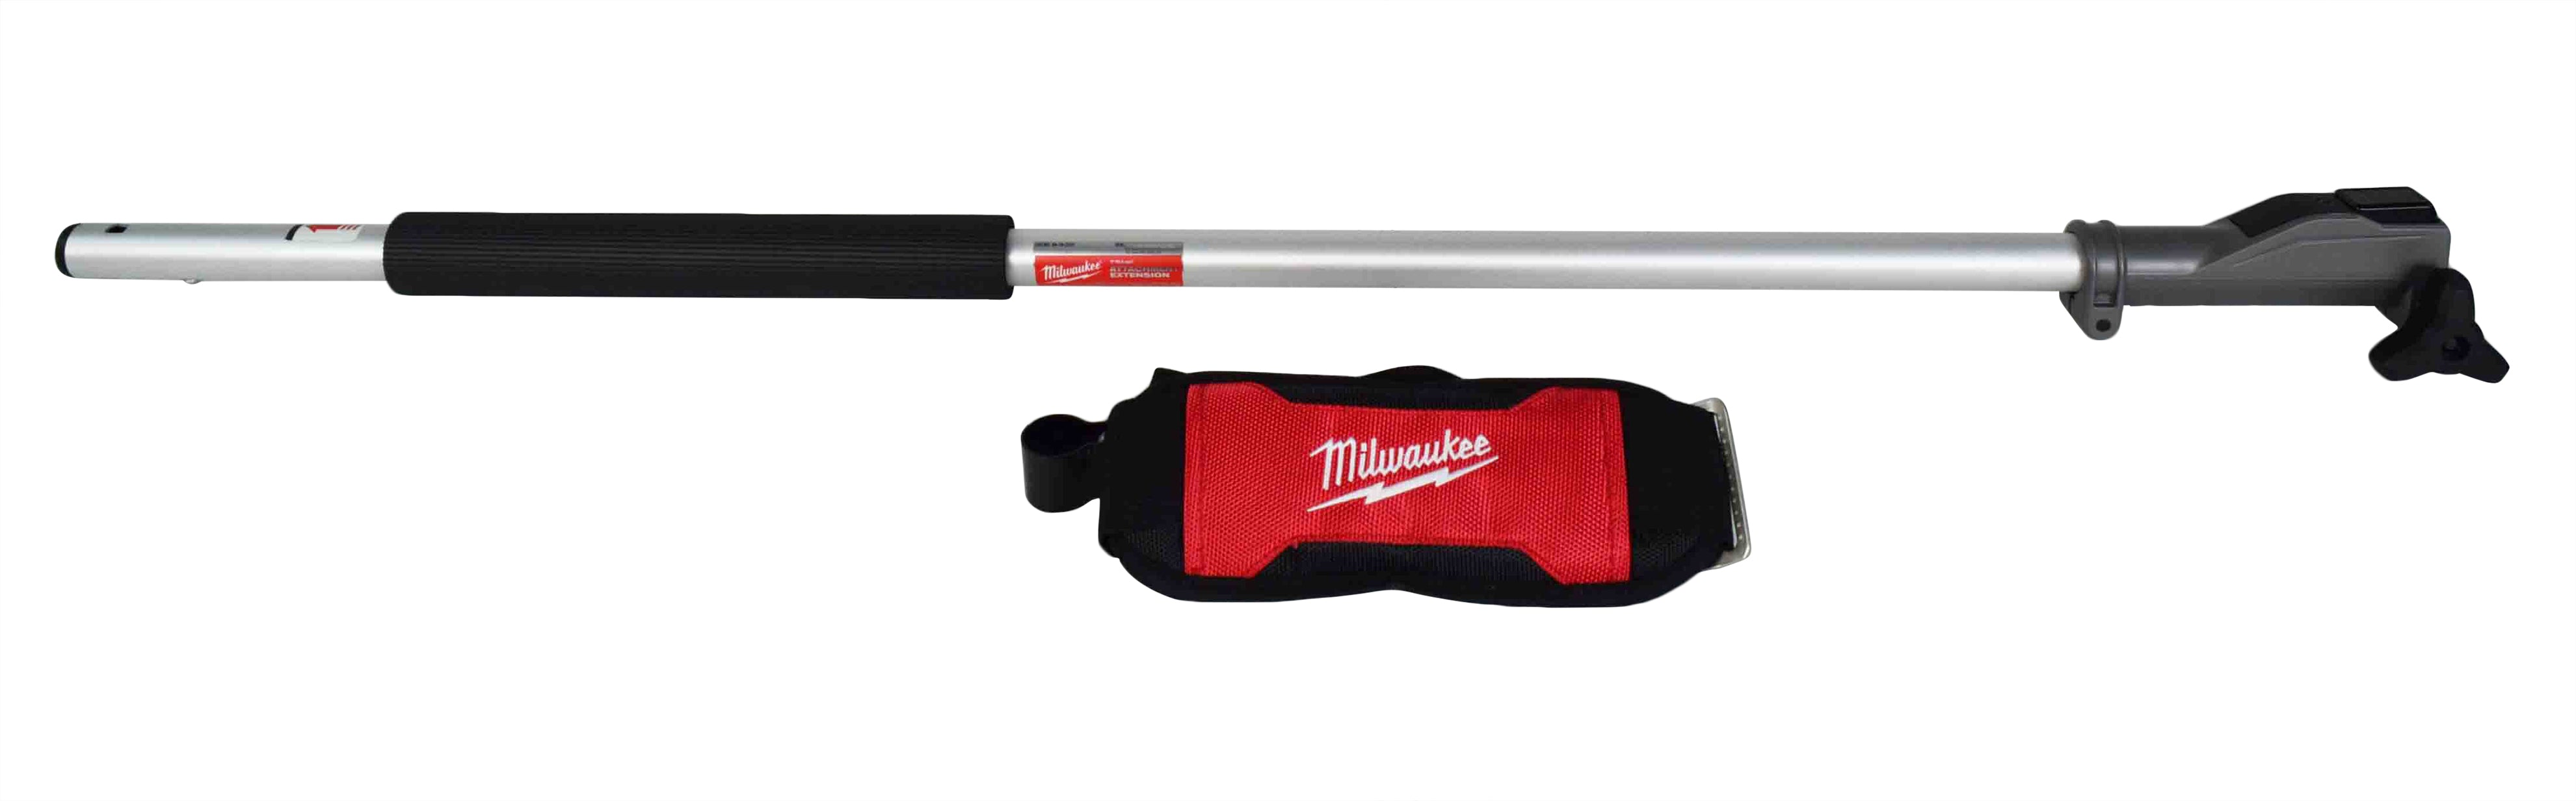 Milwaukee Fuel M18 49-16-2721 18-volt 3-foot Quik-lok Extension Attachment